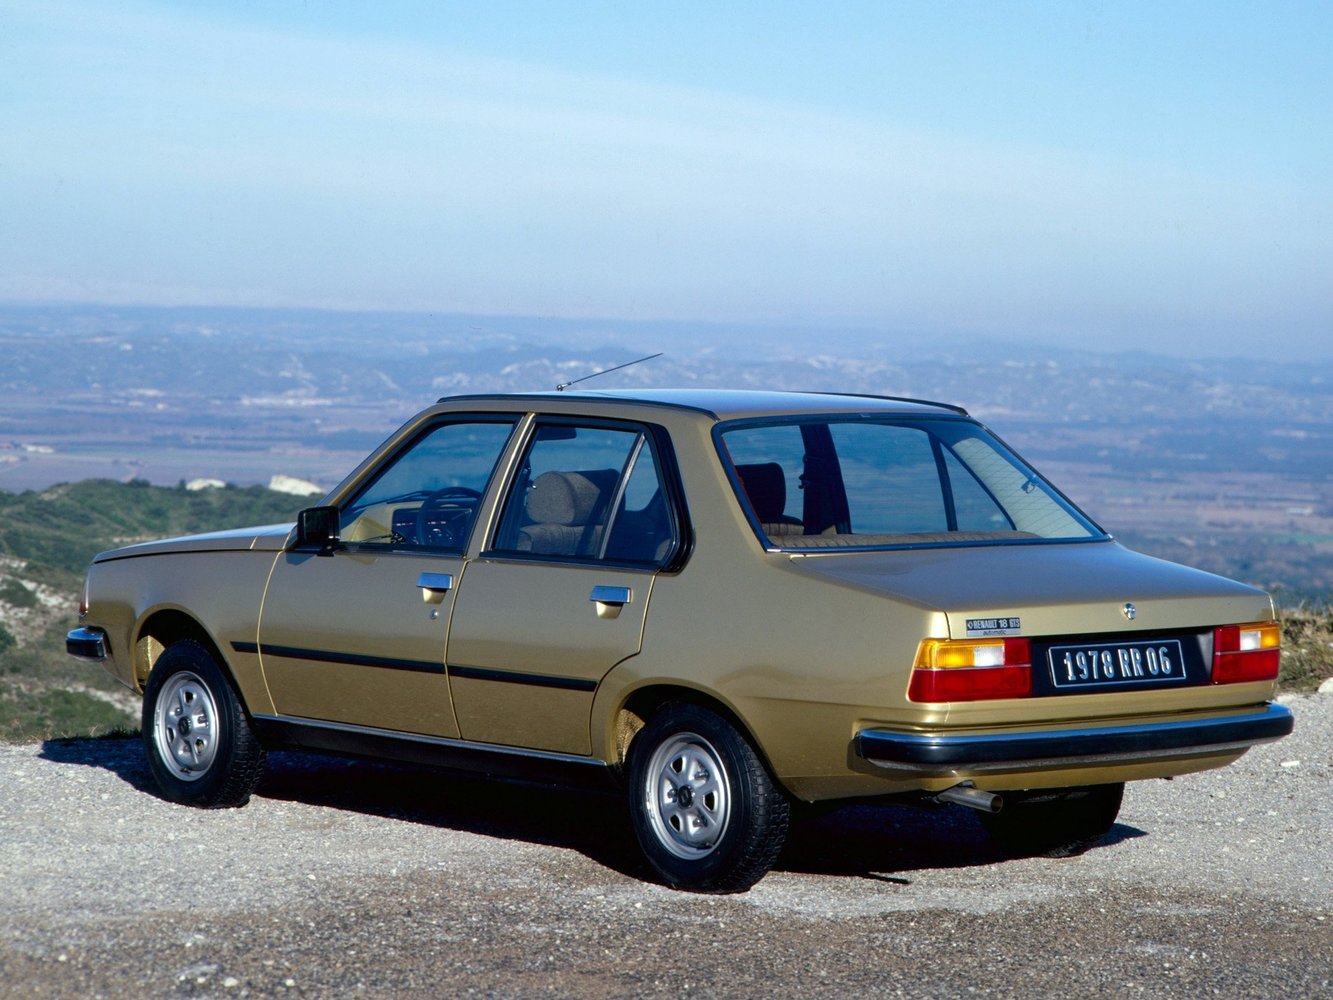 седан Renault 18 1978 - 1986г выпуска модификация 1.4 AT (64 л.с.)